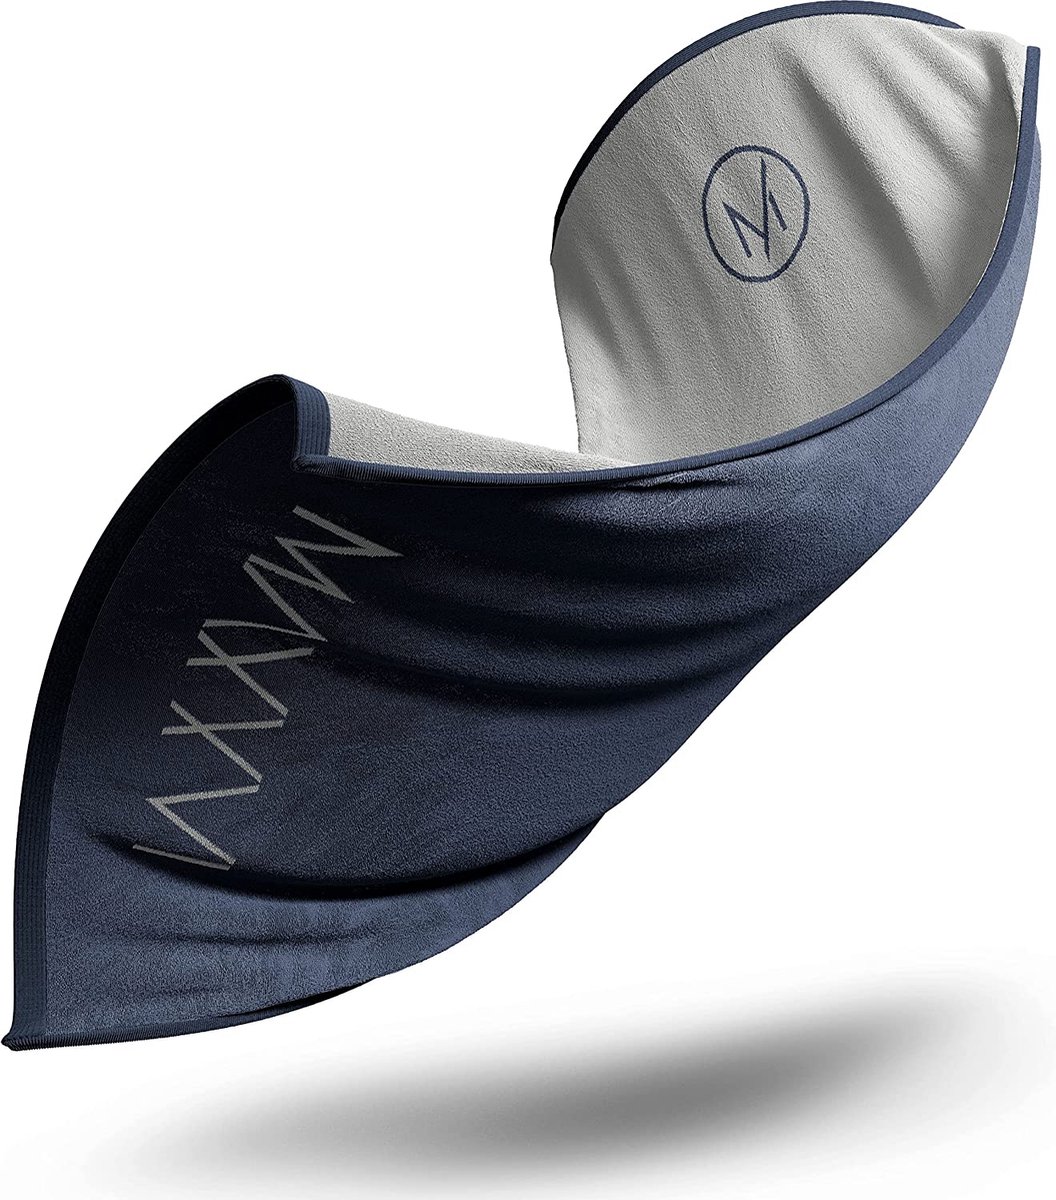 MaxxVi Sporthanddoek - tweekleurige fitnesshanddoek van 100% katoen - Made in Portugal - Oeko-Tex Standard 100